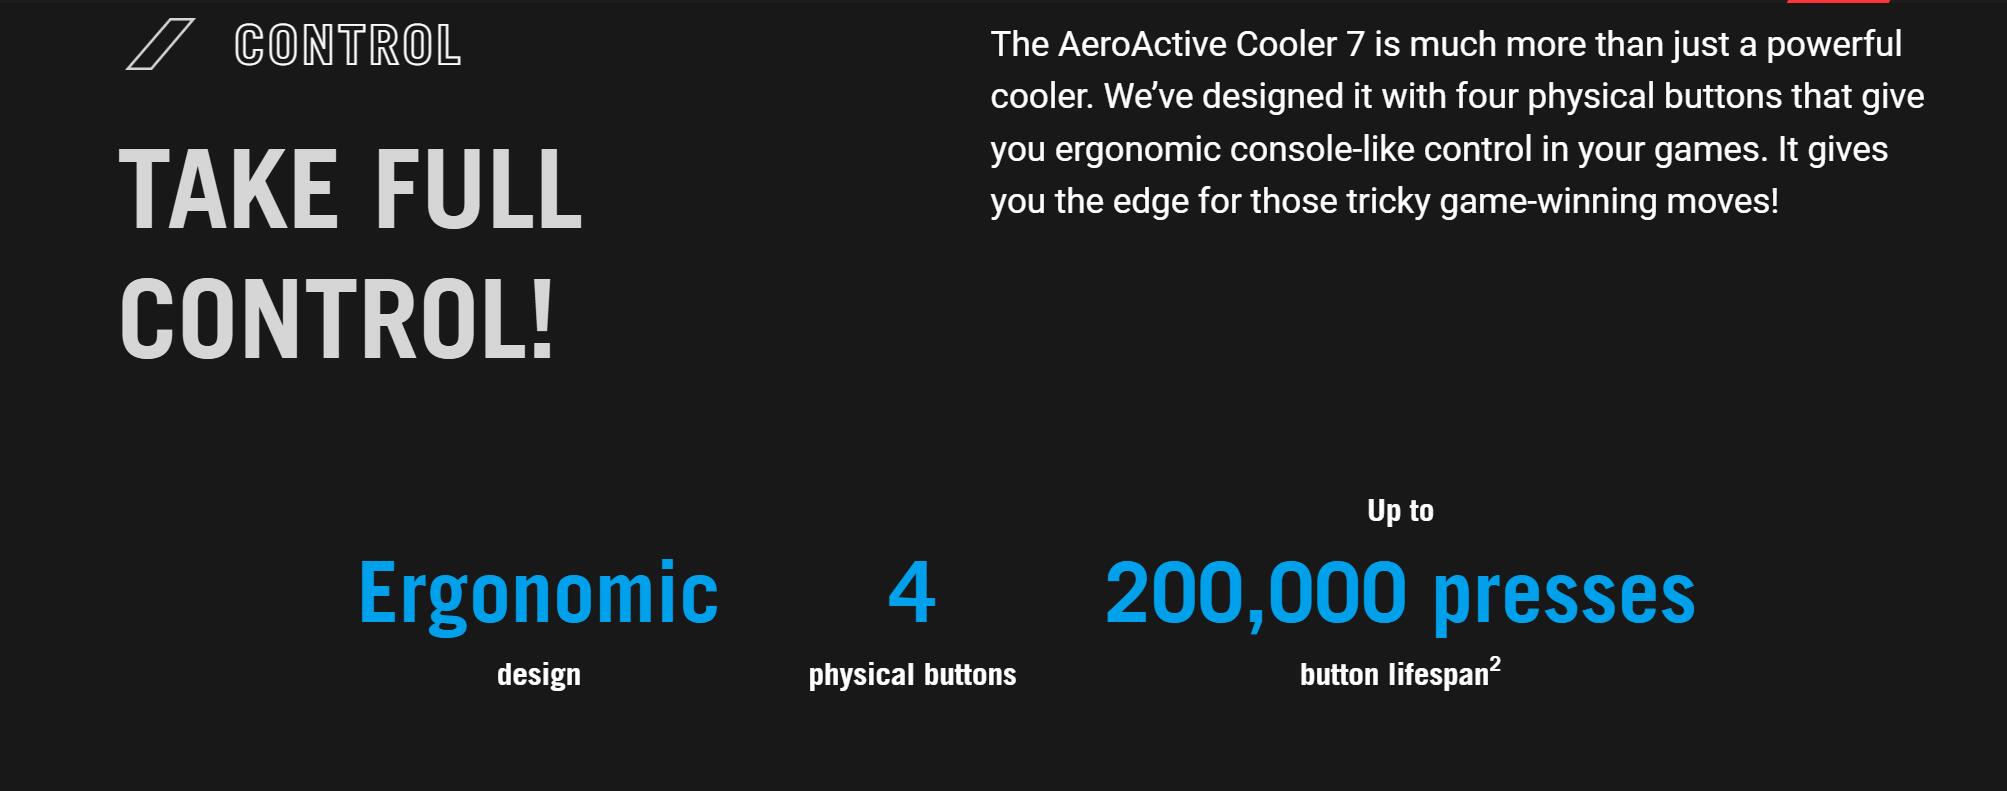 ASUS ROG AeroActive Cooler 7